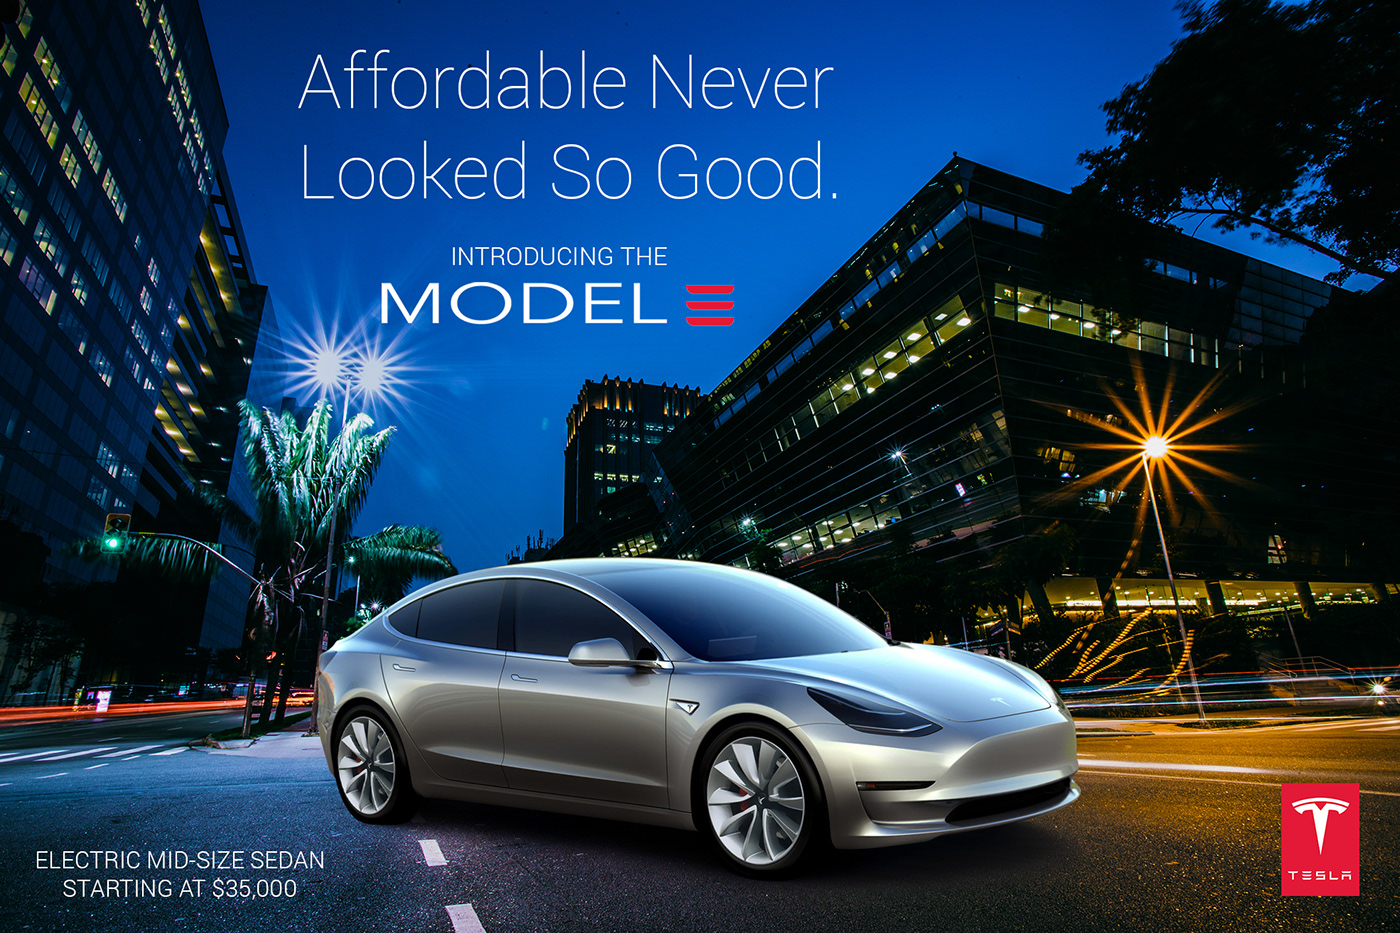 Tesla Model 3 Ad Campaign